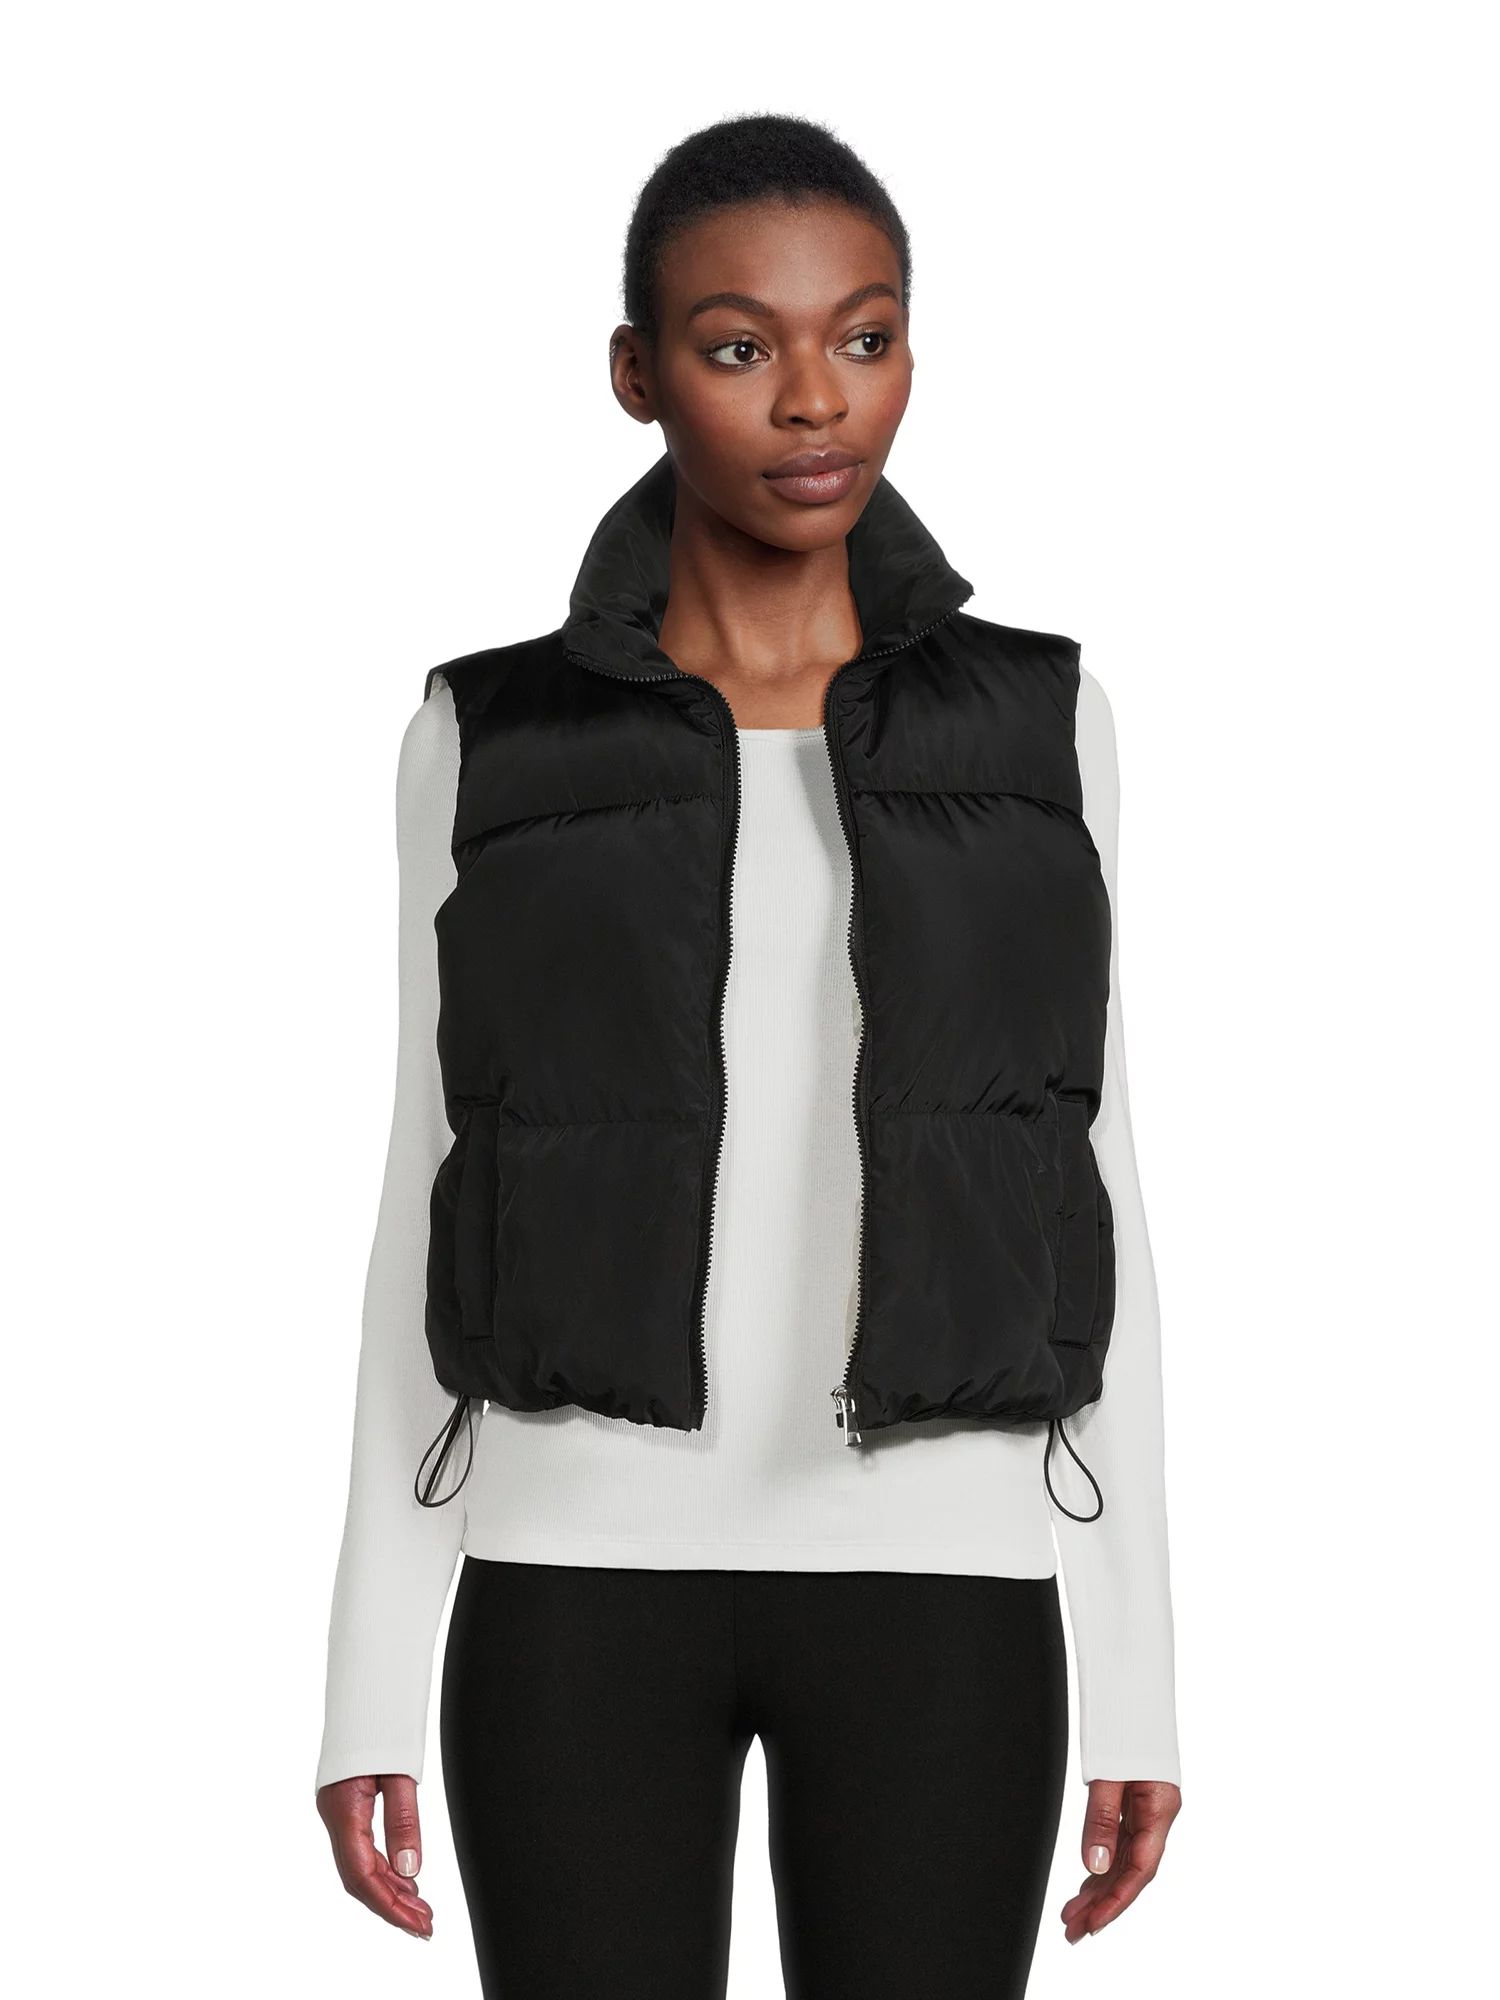 Liv & Lottie Juniors Cropped Puffer Vest with Pockets, Sizes S-XL | Walmart (US)